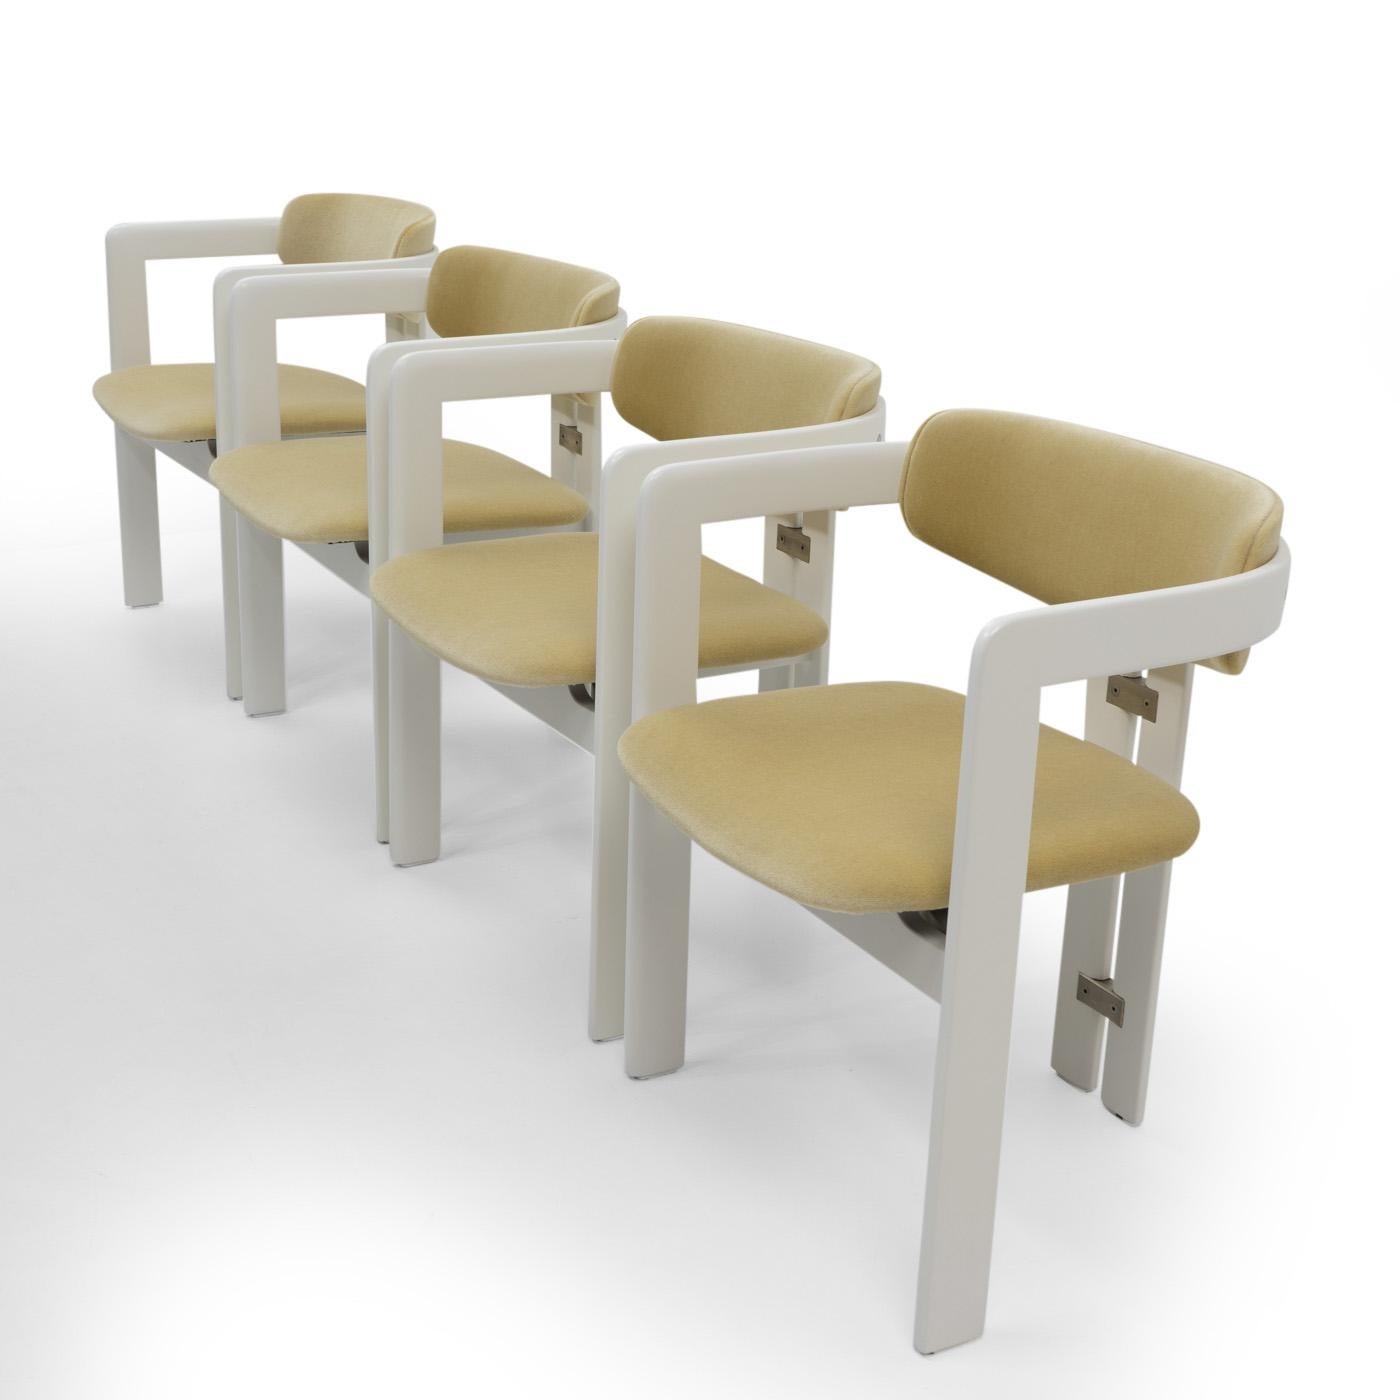 Italian Design Pamplona Chairs by Augusto Savini, 1970s For Sale 10